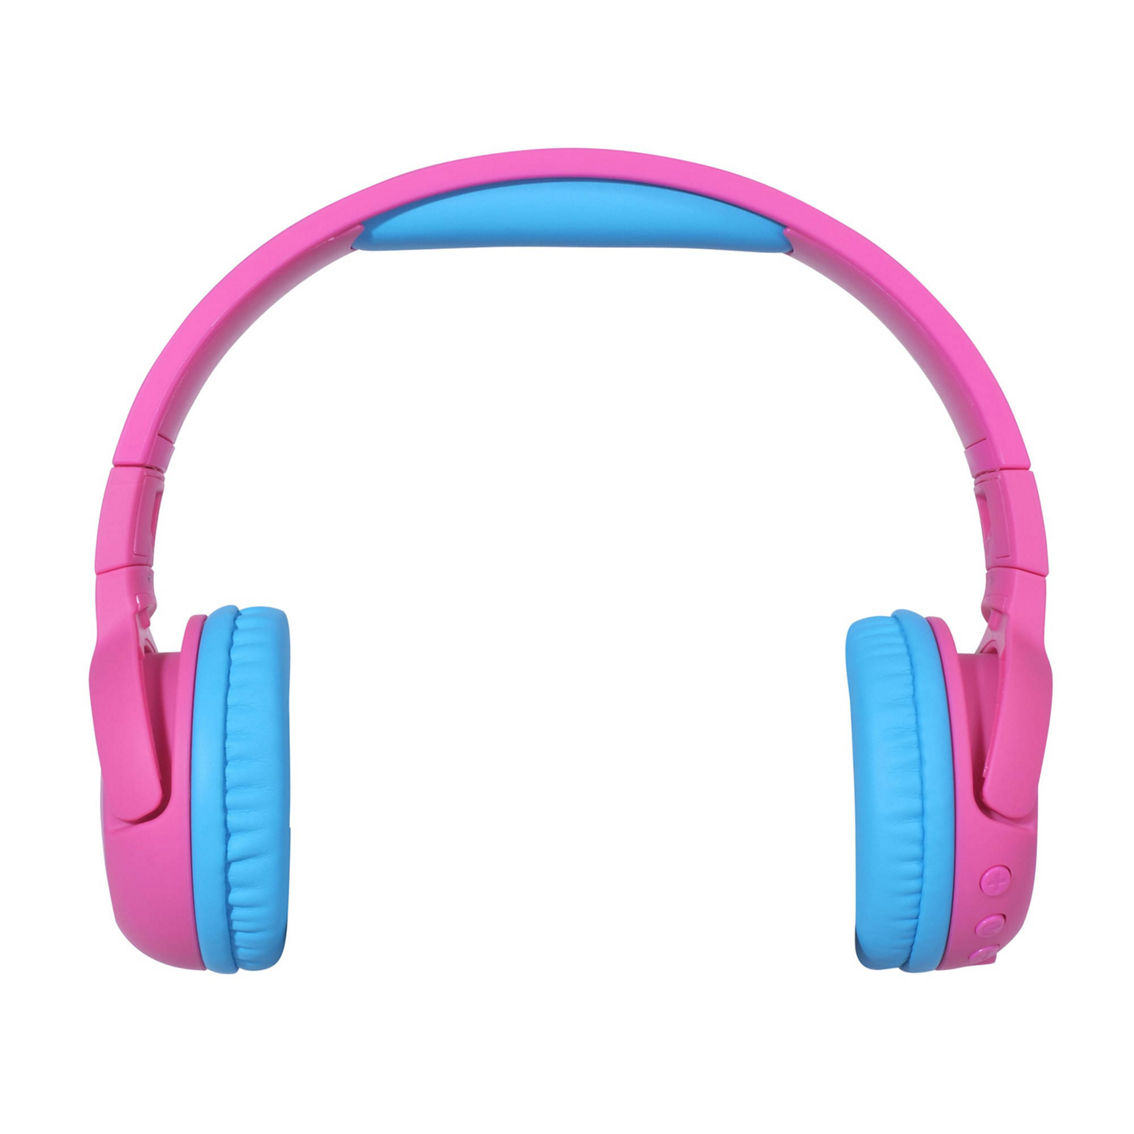 Contixo KB5 Kids Wireless Bluetooth Headphones, Pink - Image 3 of 4